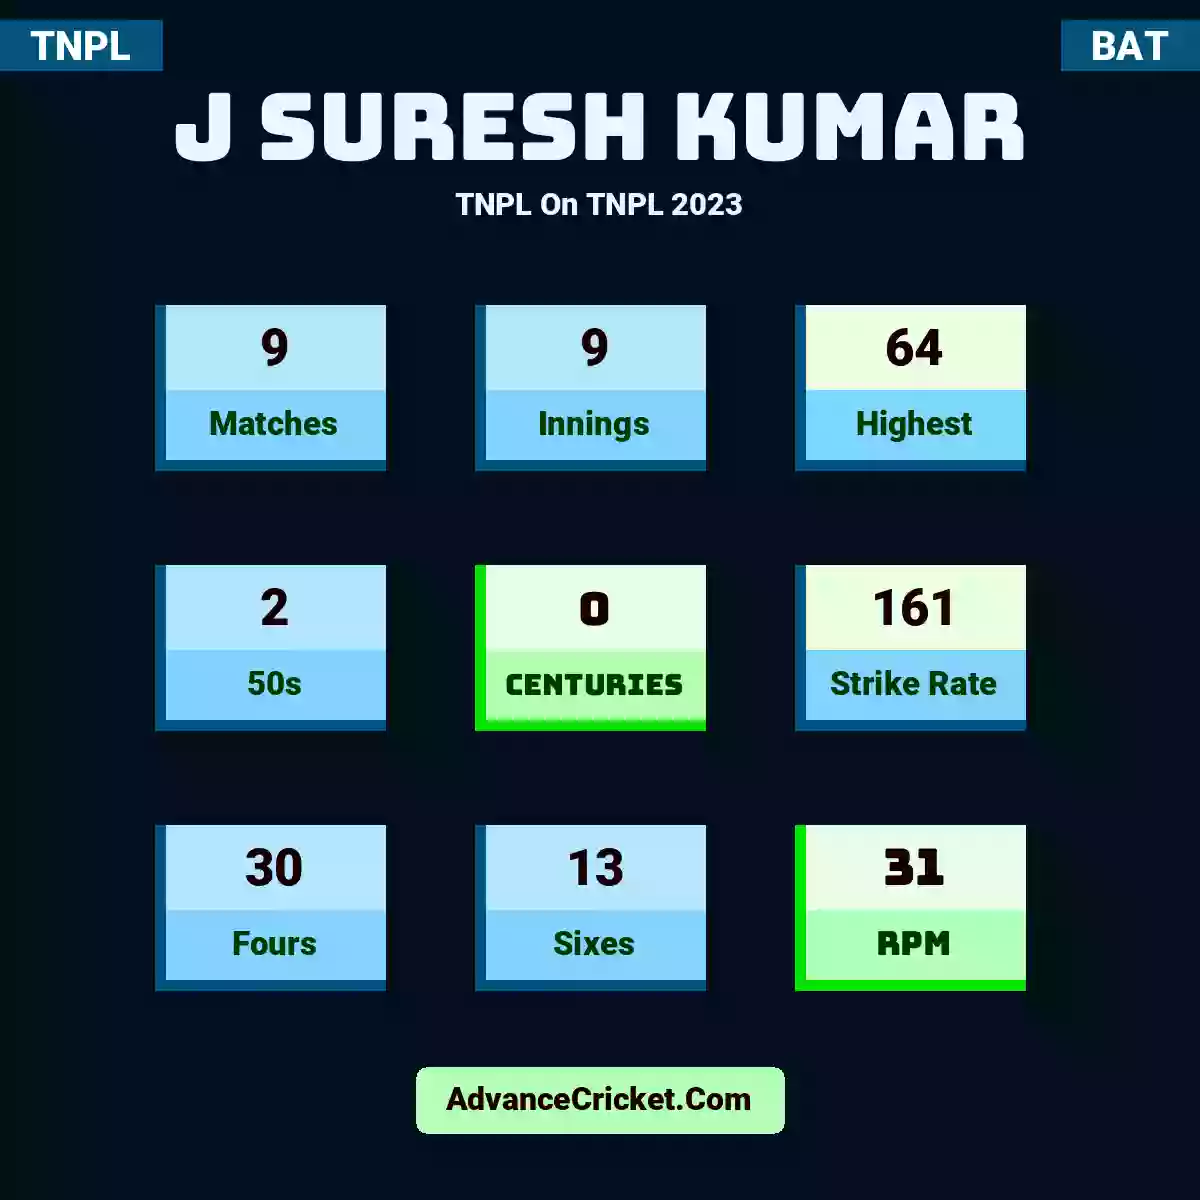 J Suresh Kumar TNPL  On TNPL 2023, J Suresh Kumar played 9 matches, scored 64 runs as highest, 2 half-centuries, and 0 centuries, with a strike rate of 161. J.Kumar hit 30 fours and 13 sixes, with an RPM of 31.